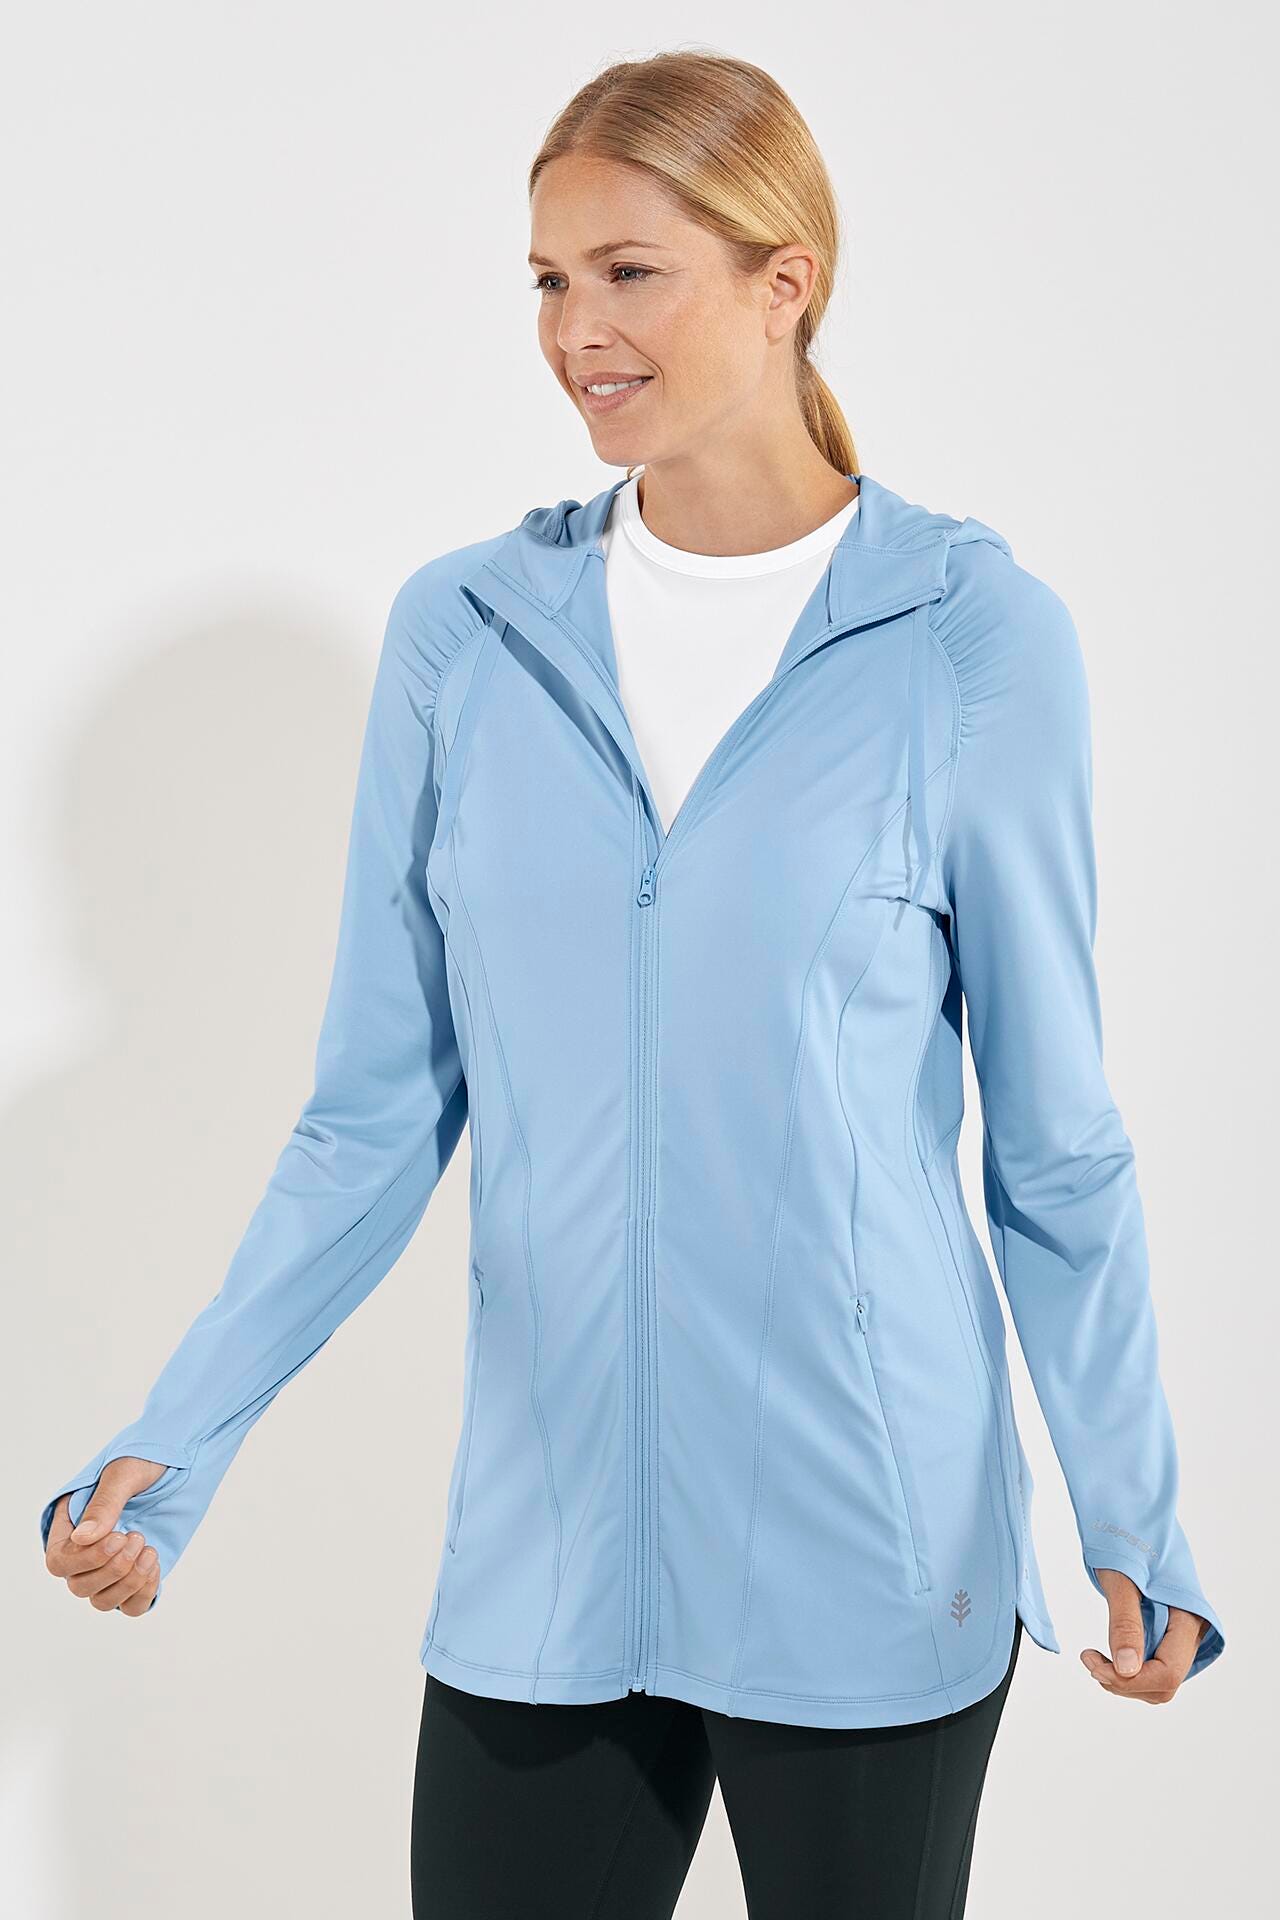 Women's Astir Full-Zip Jacket UPF 50+ - Coolibar